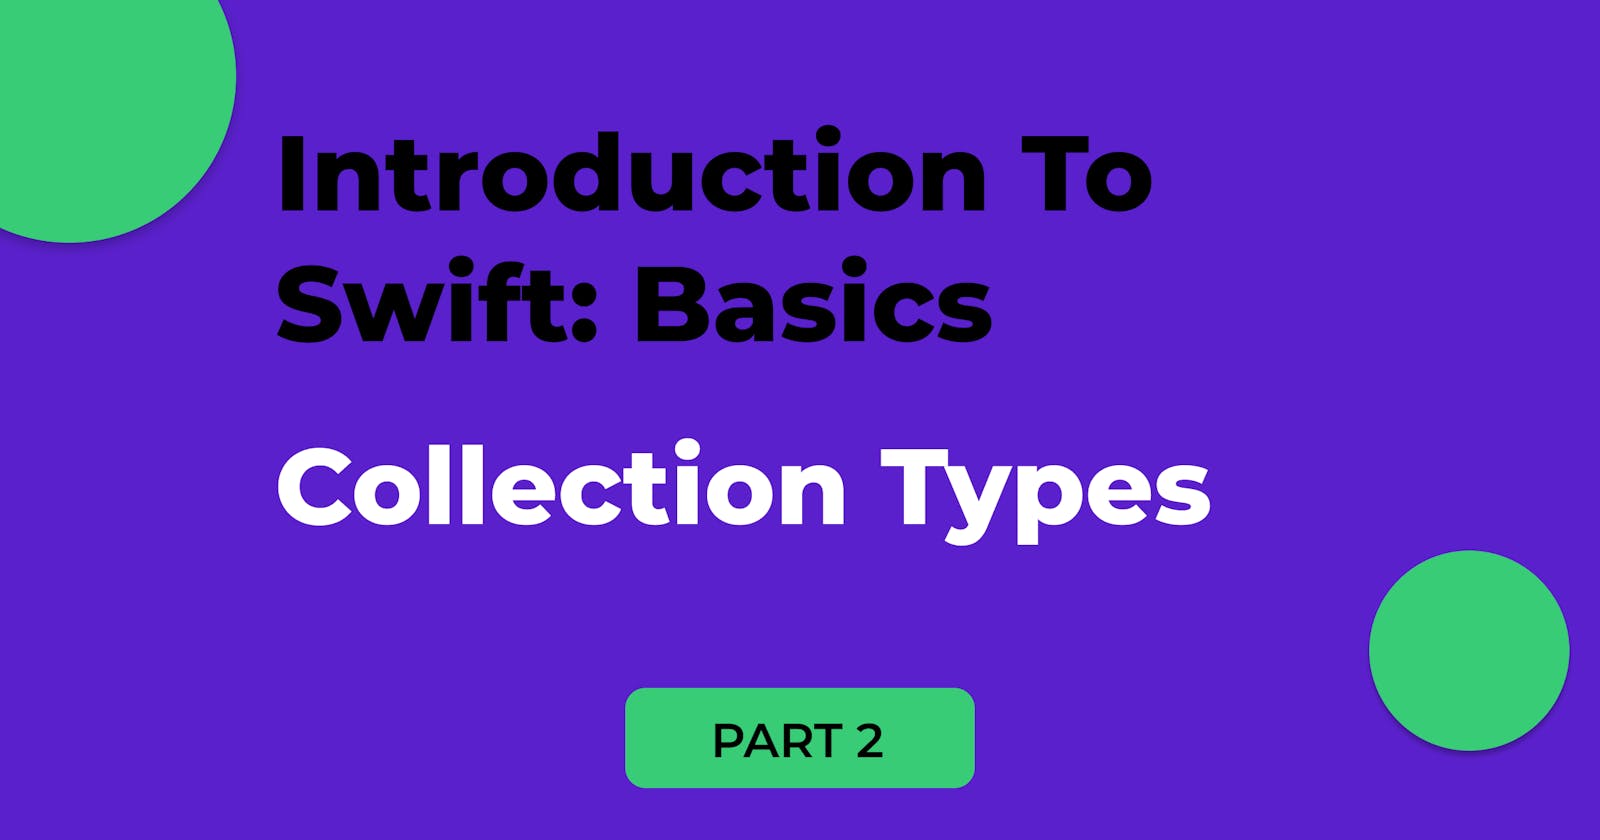 Introduction To Swift: Basics (Part 2)